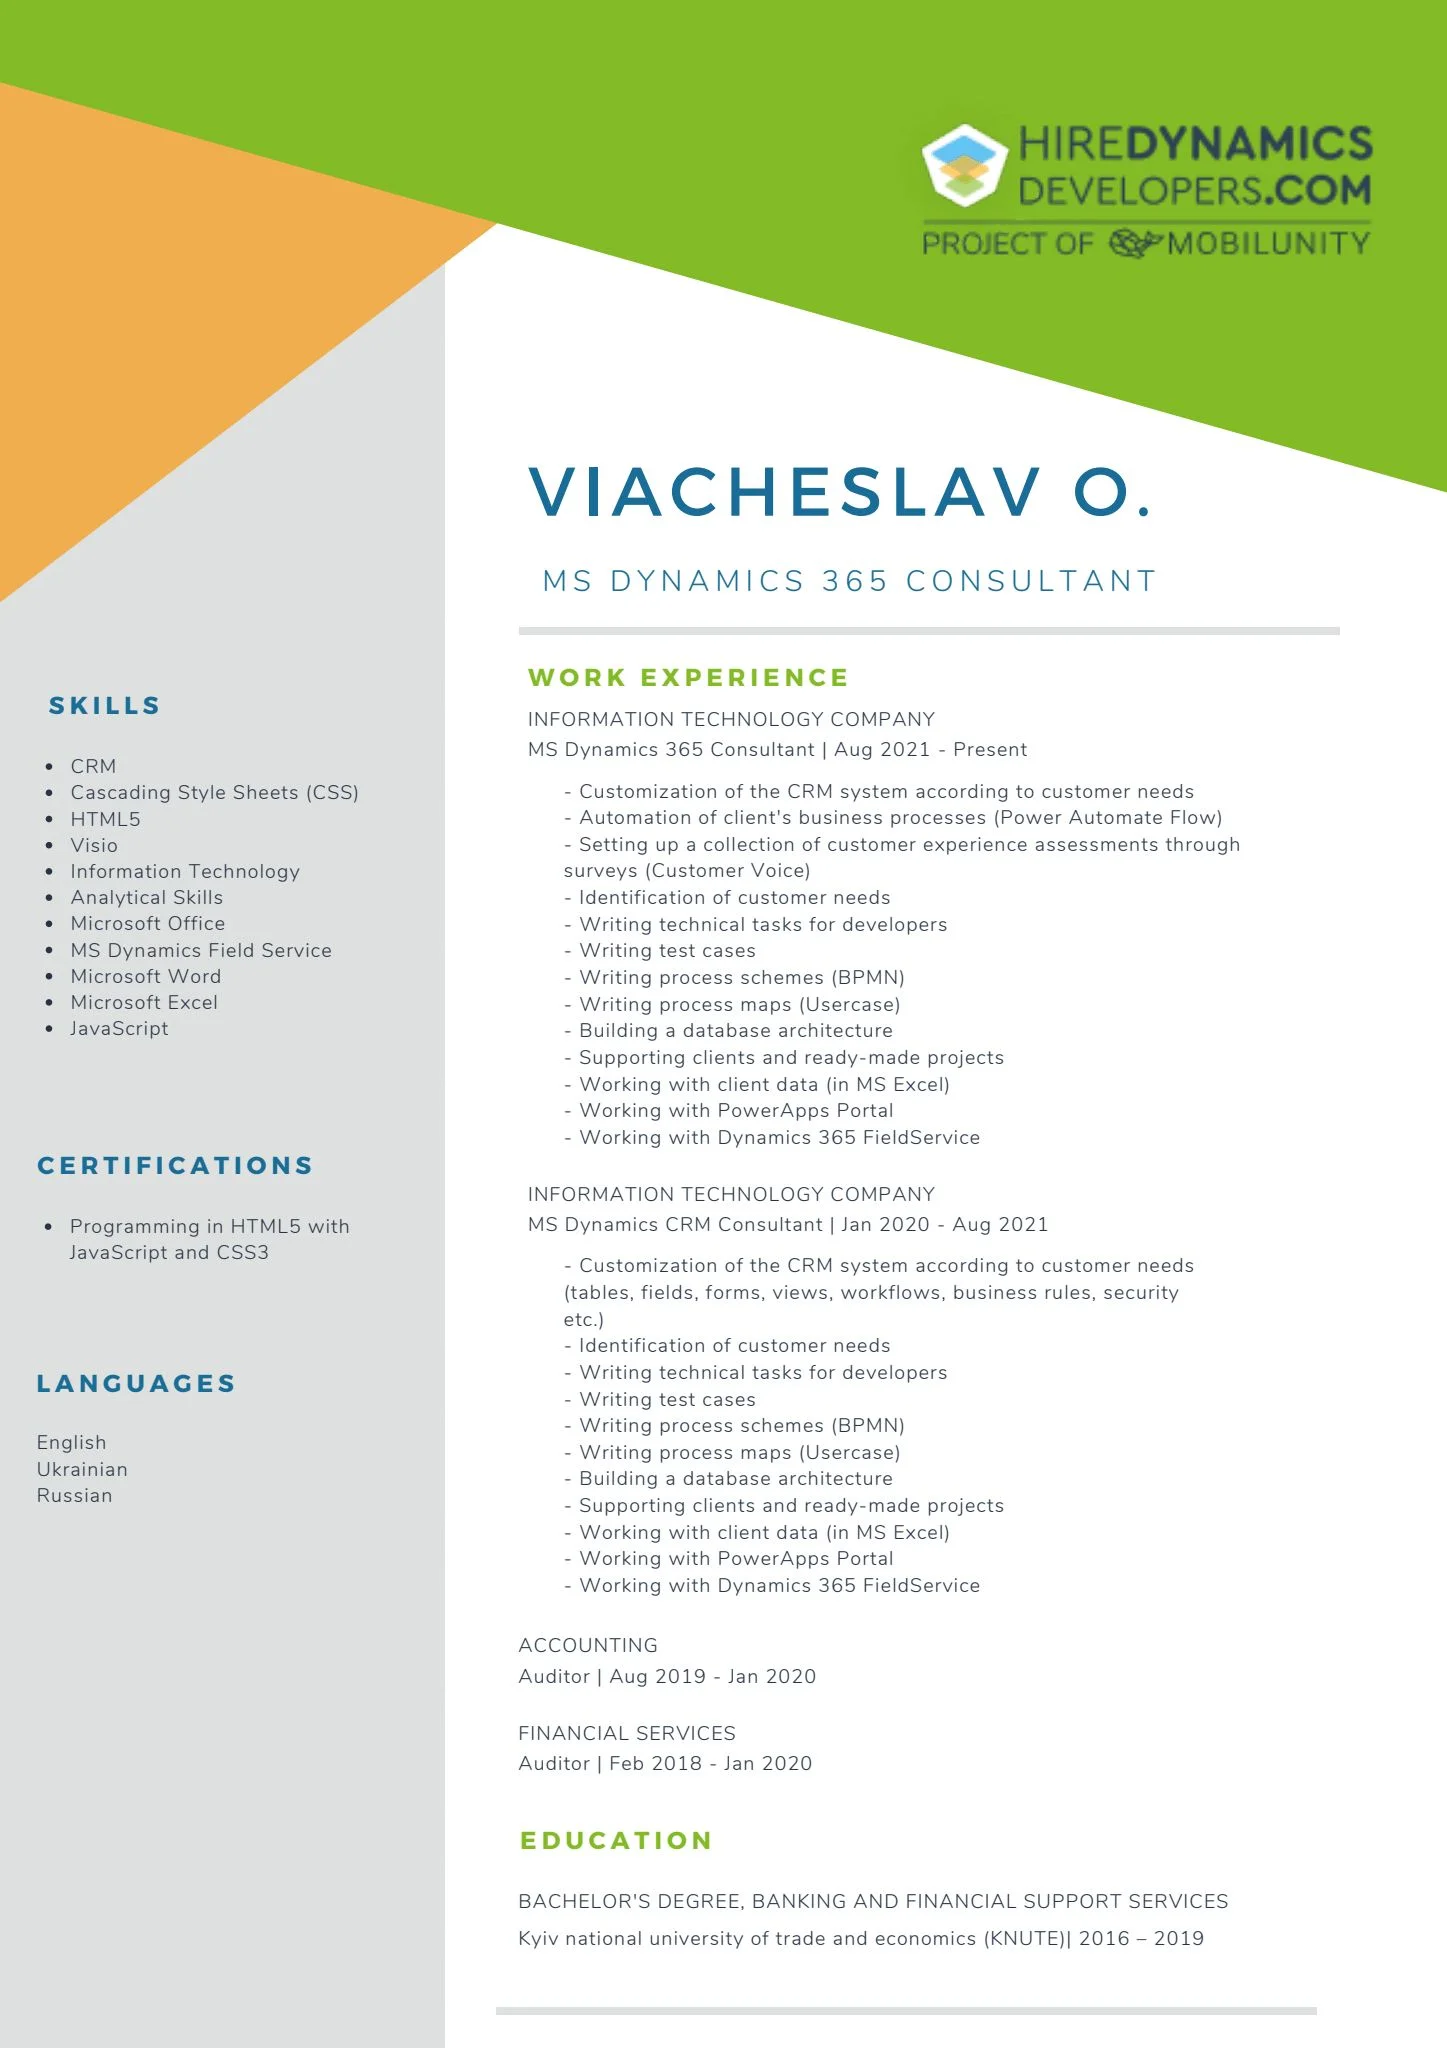 Viacheslav O. – MS Dynamics 365 CE Consultant